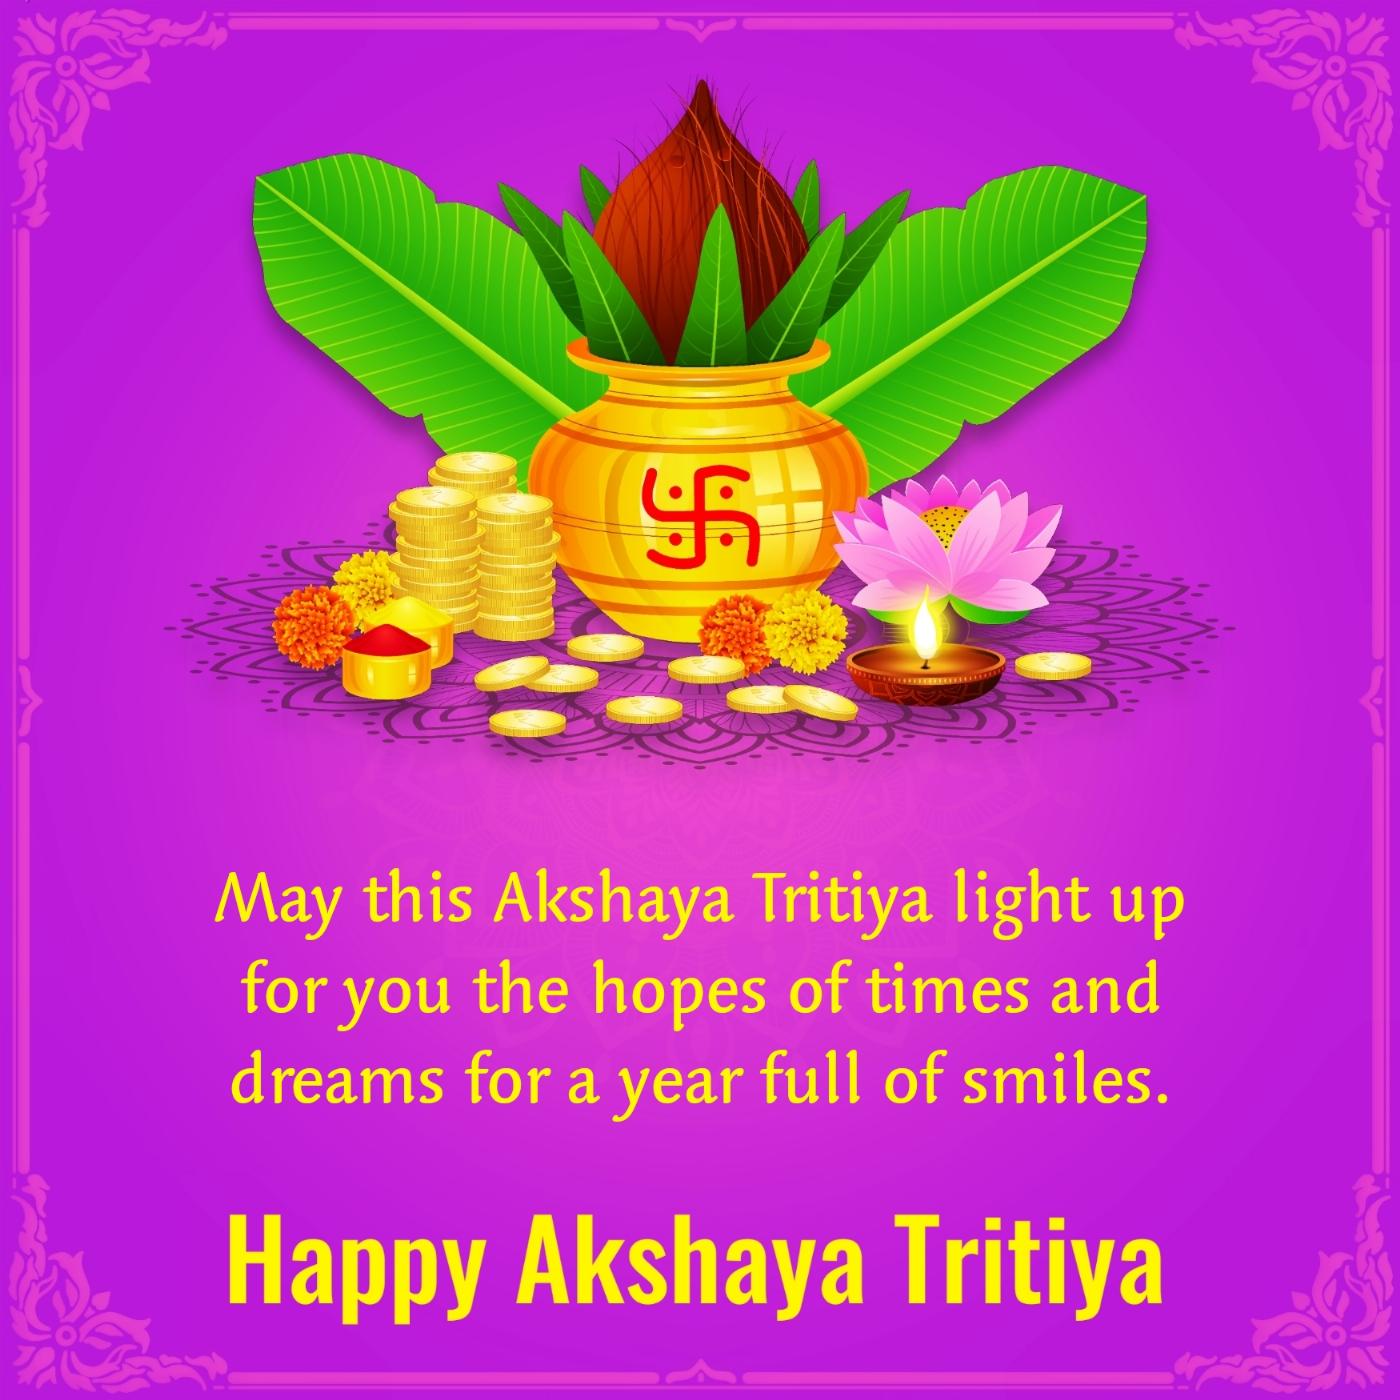 May this Akshaya Tritiya light up for you the hopes of times